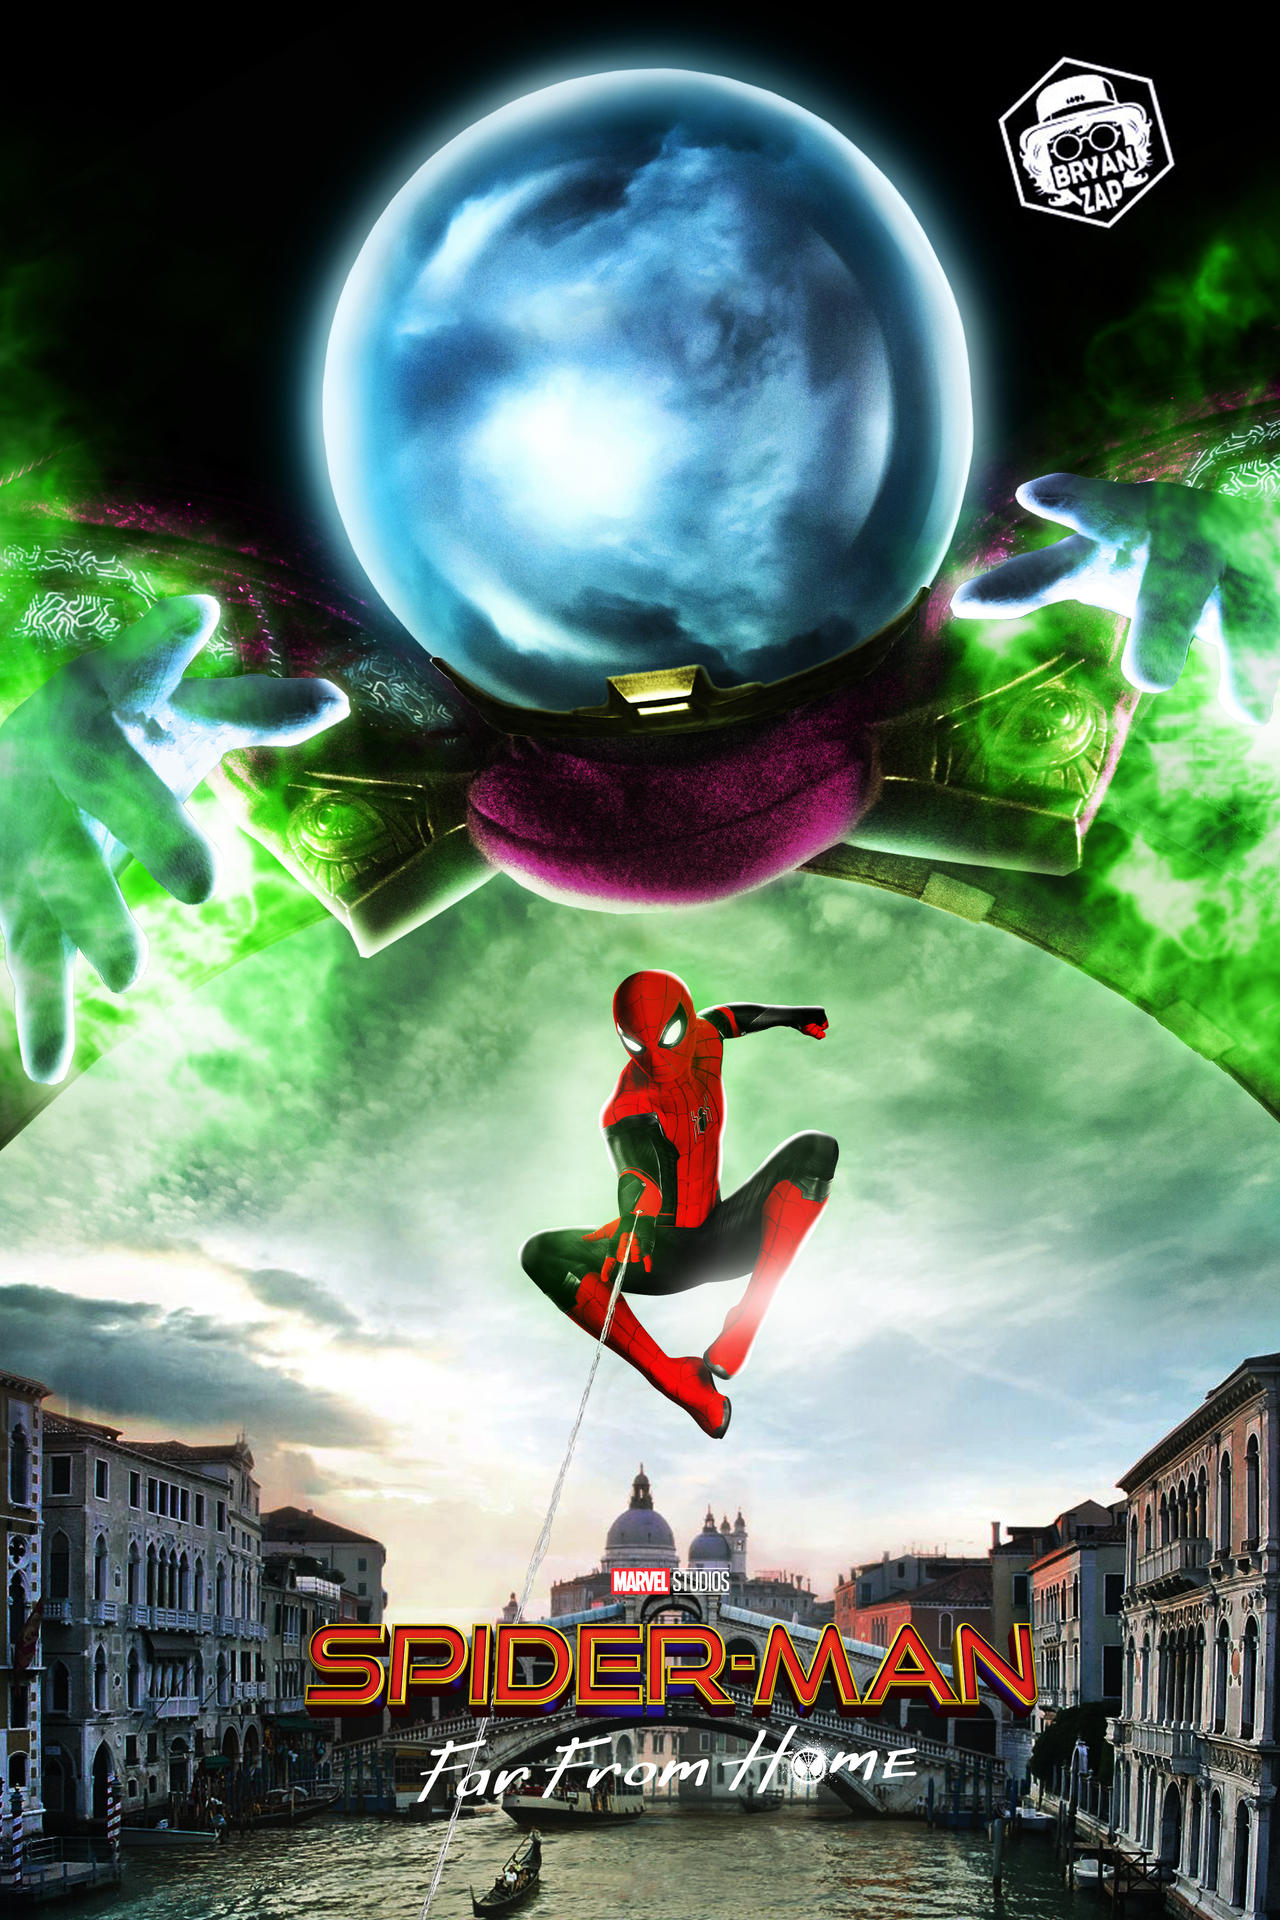 Spider - Man Far From Home Mysterio Poster by Bryanzap on DeviantArt